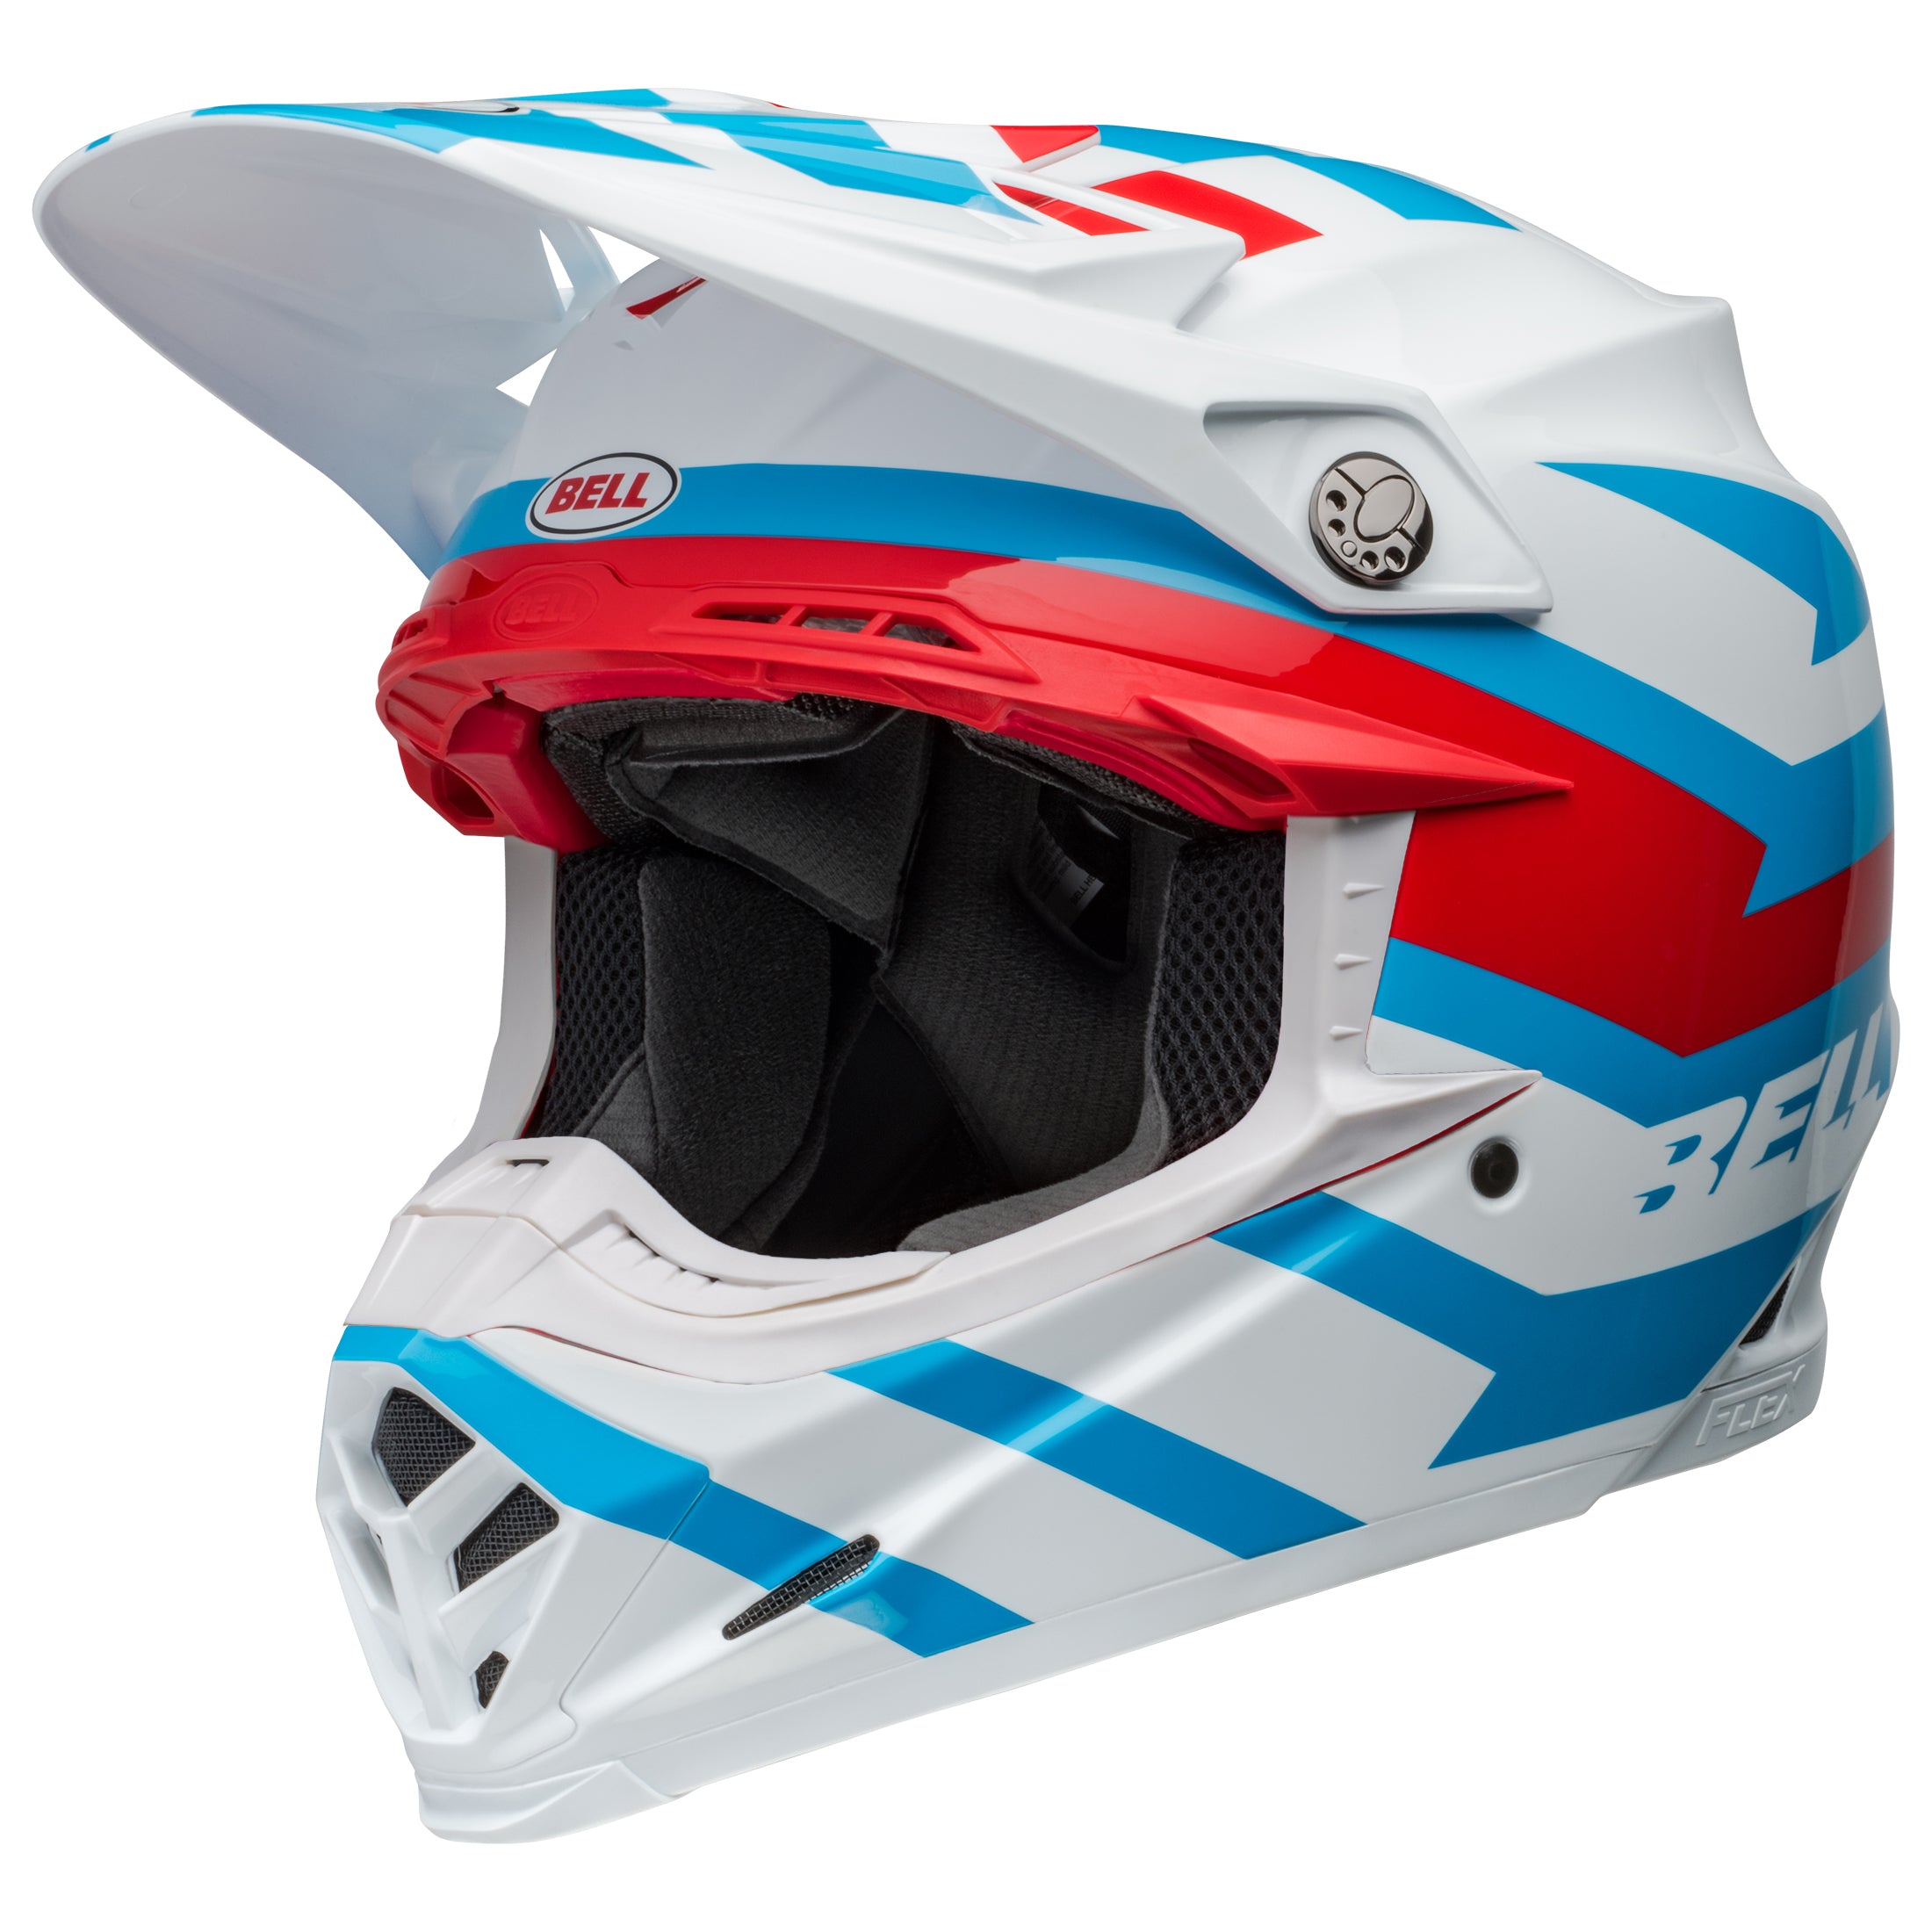 Bell MX 2024 Moto-9S Flex Adult Helmet in Banshee White and Red design, ECE6 certified